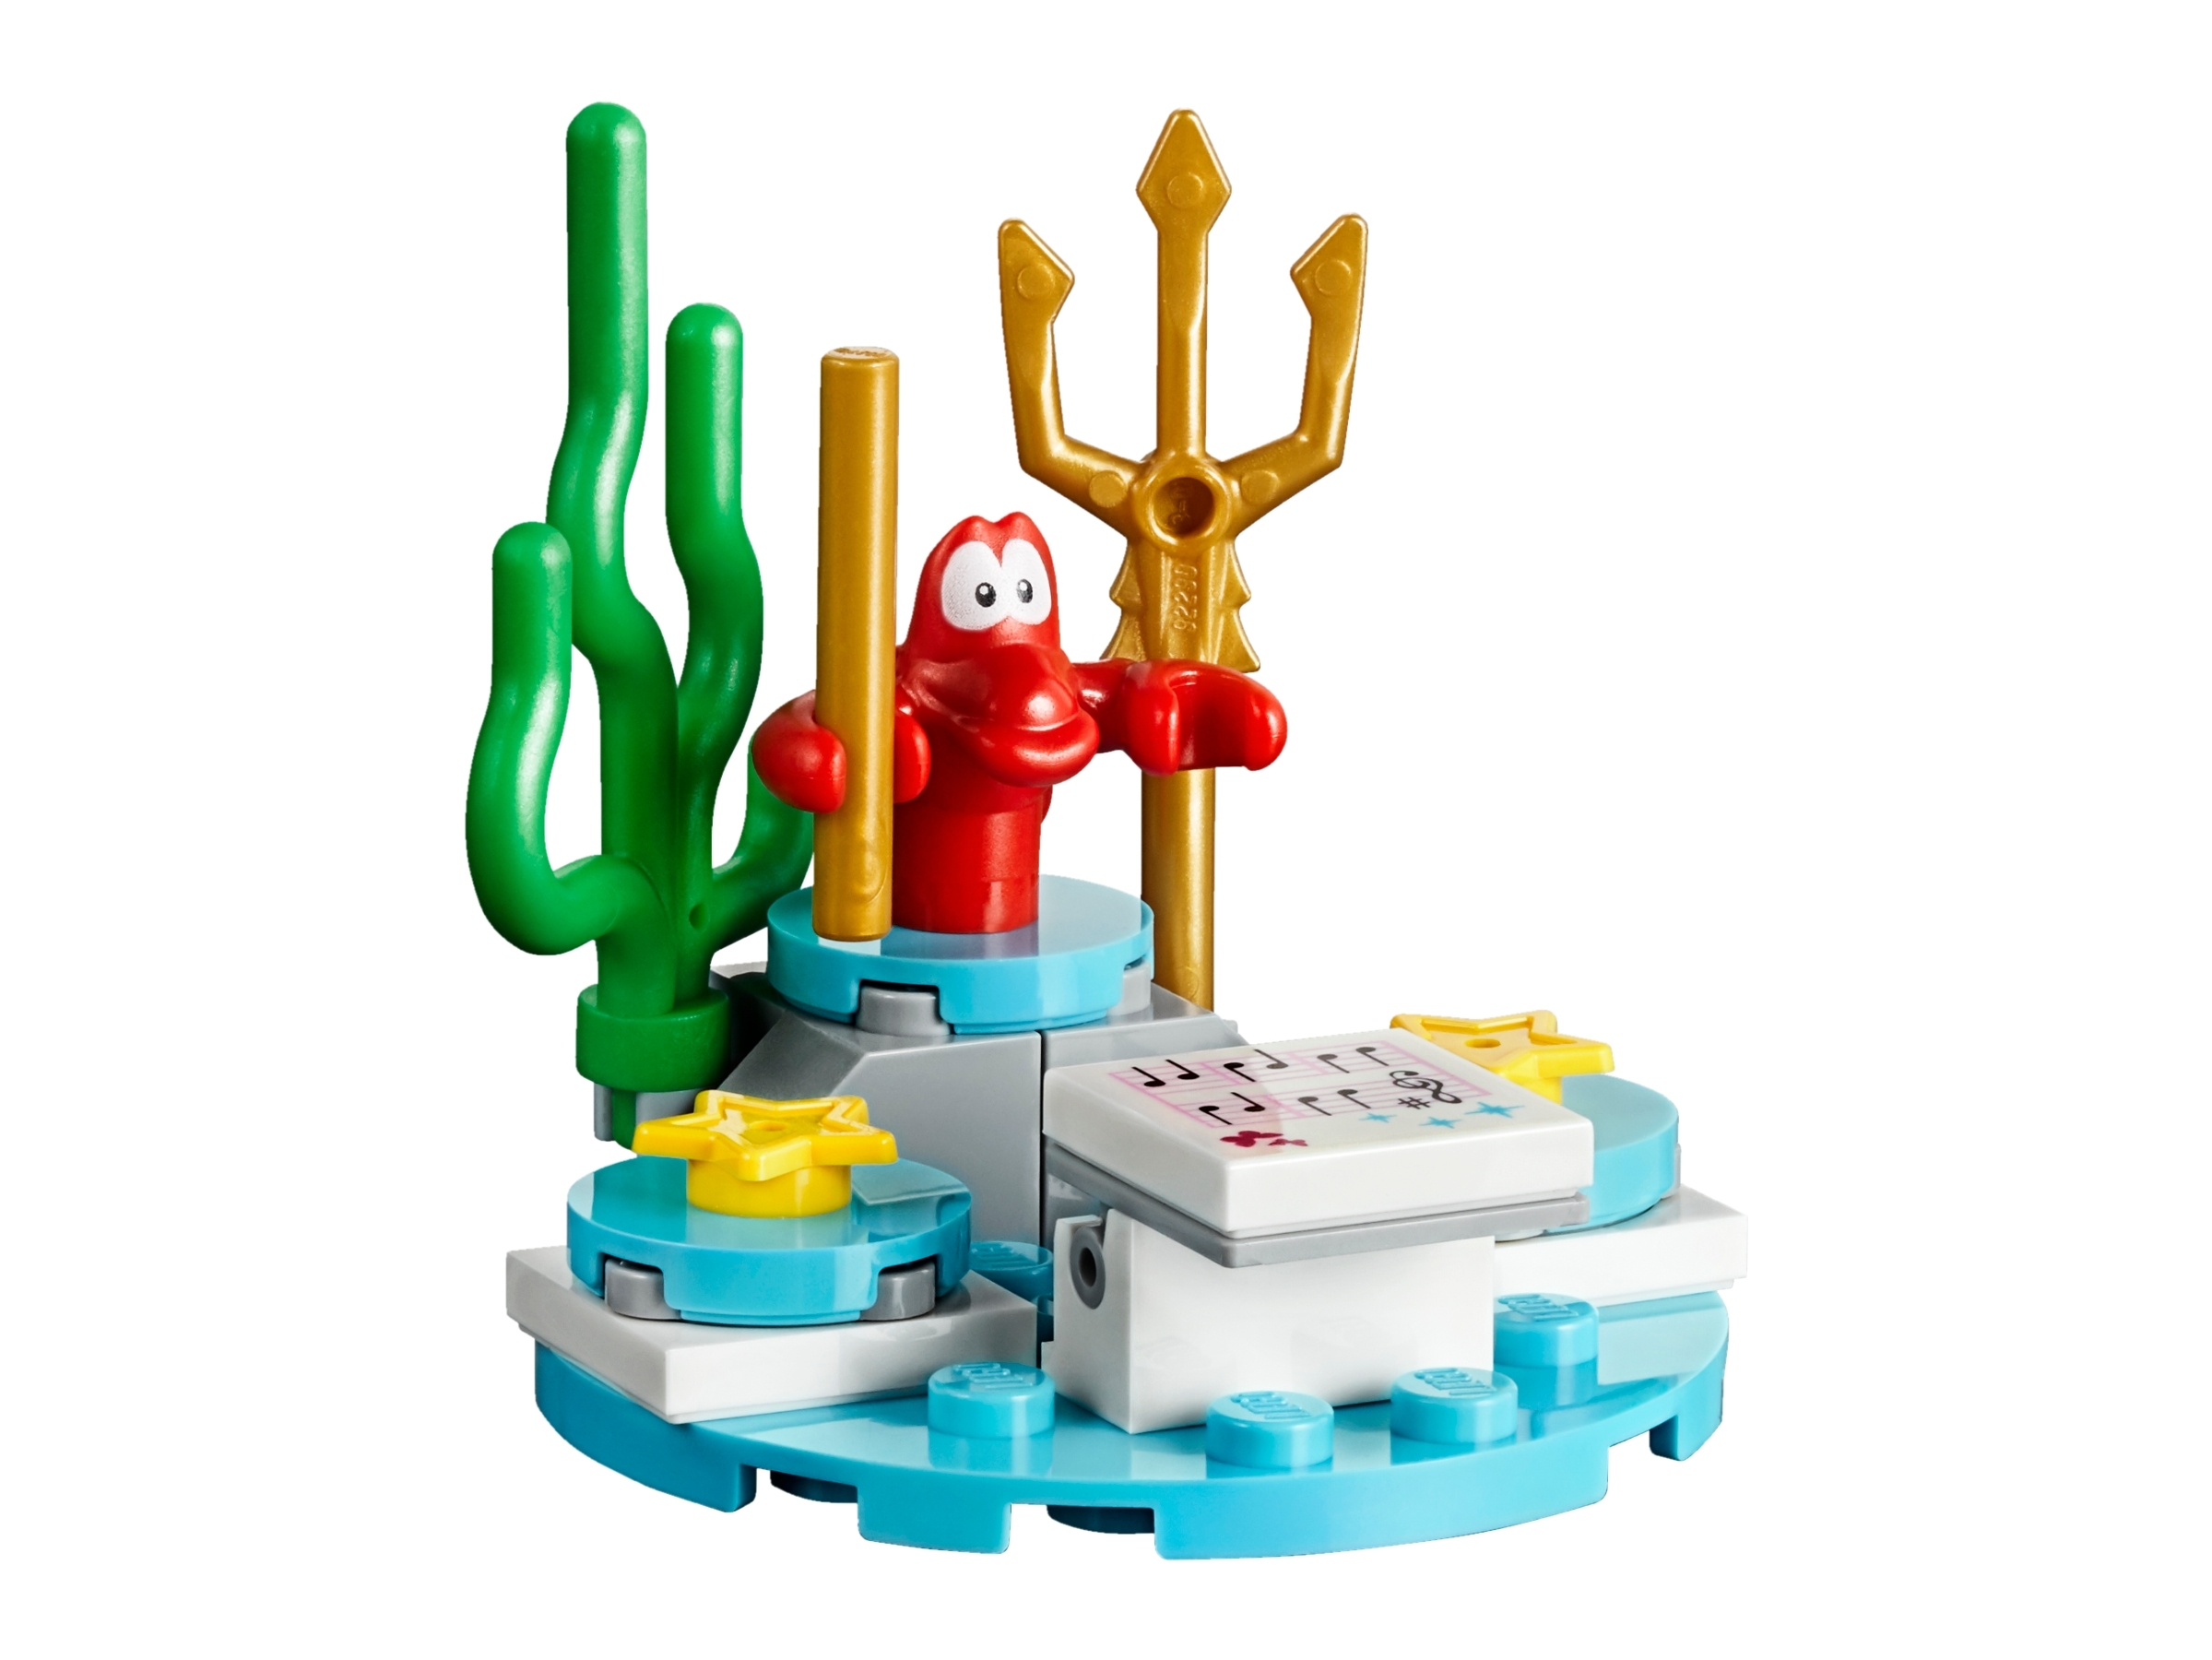 Lego Disney Princess Ariel & Prince Eric Minifigures From lego set 41153 